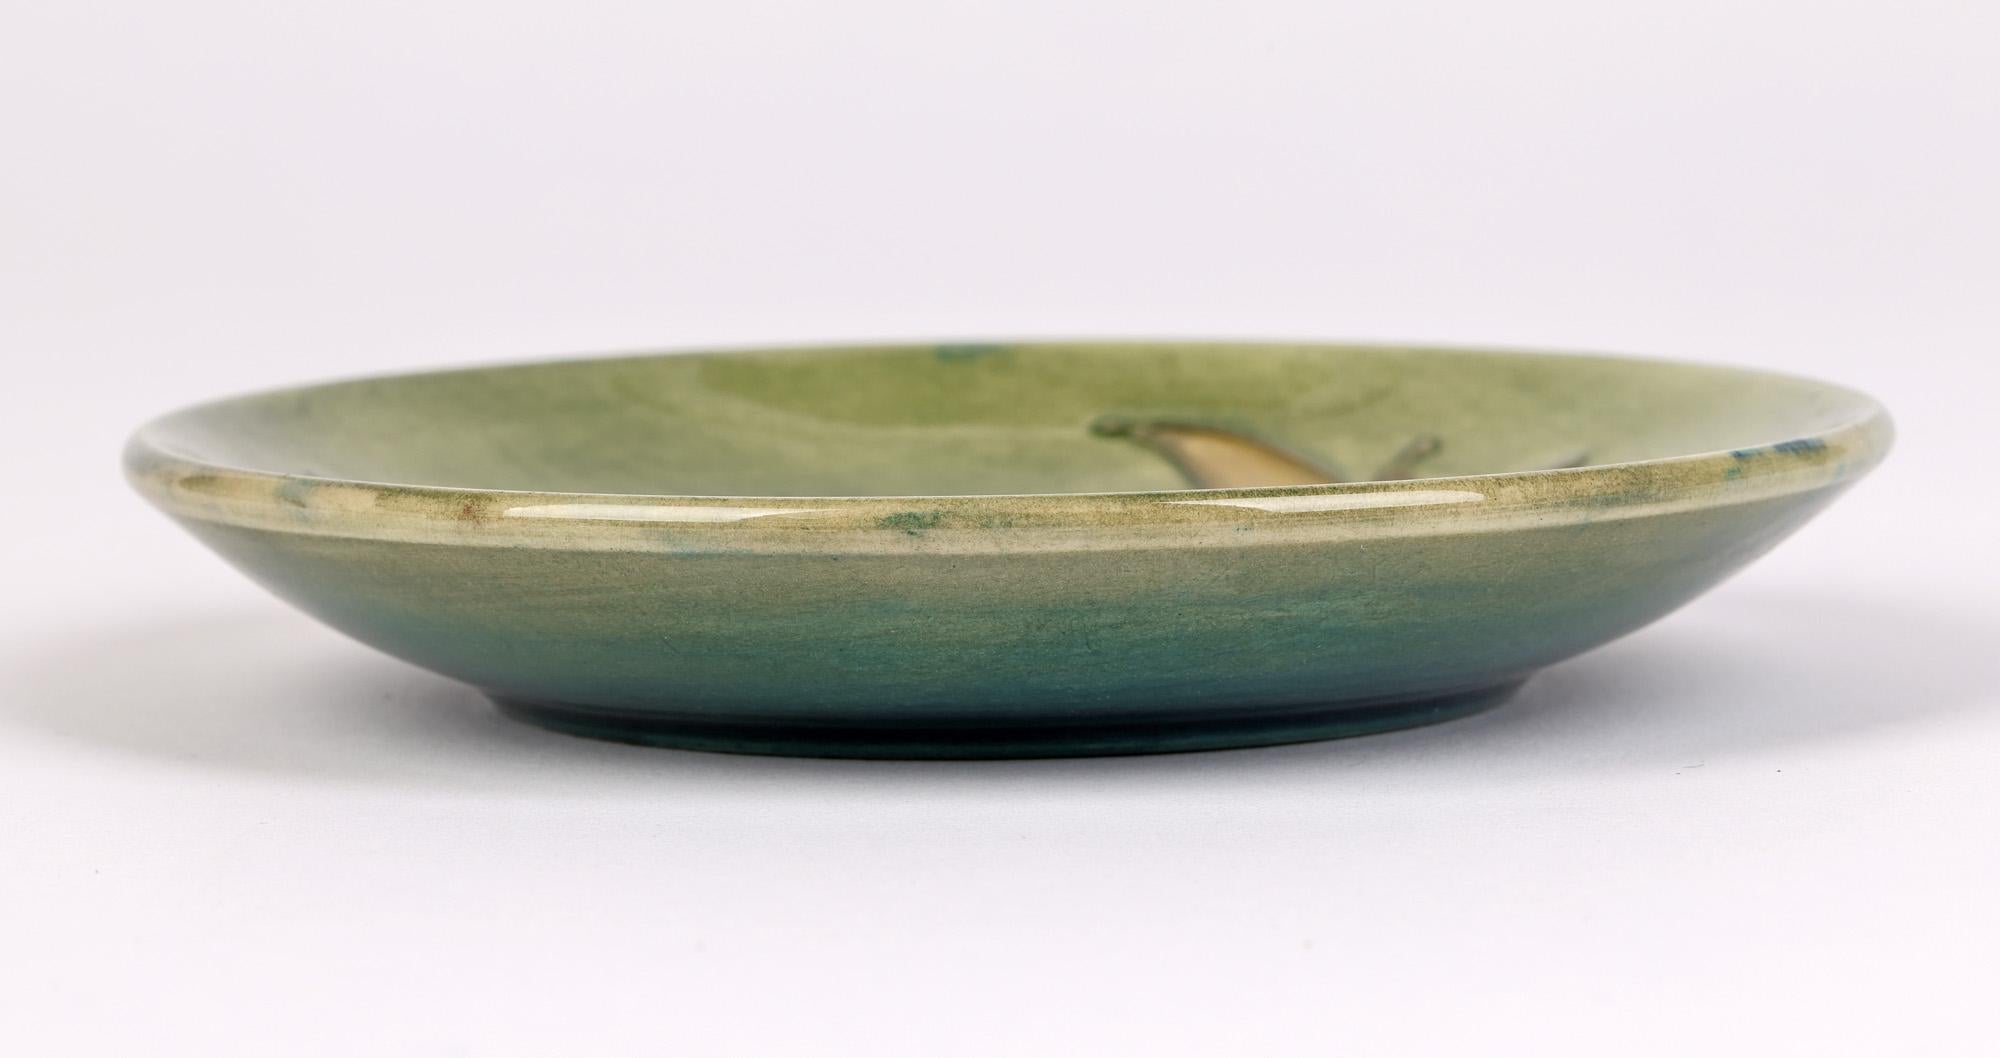 English Moorcroft Art Deco Tubelined Leaf Design Pottery Dish   For Sale